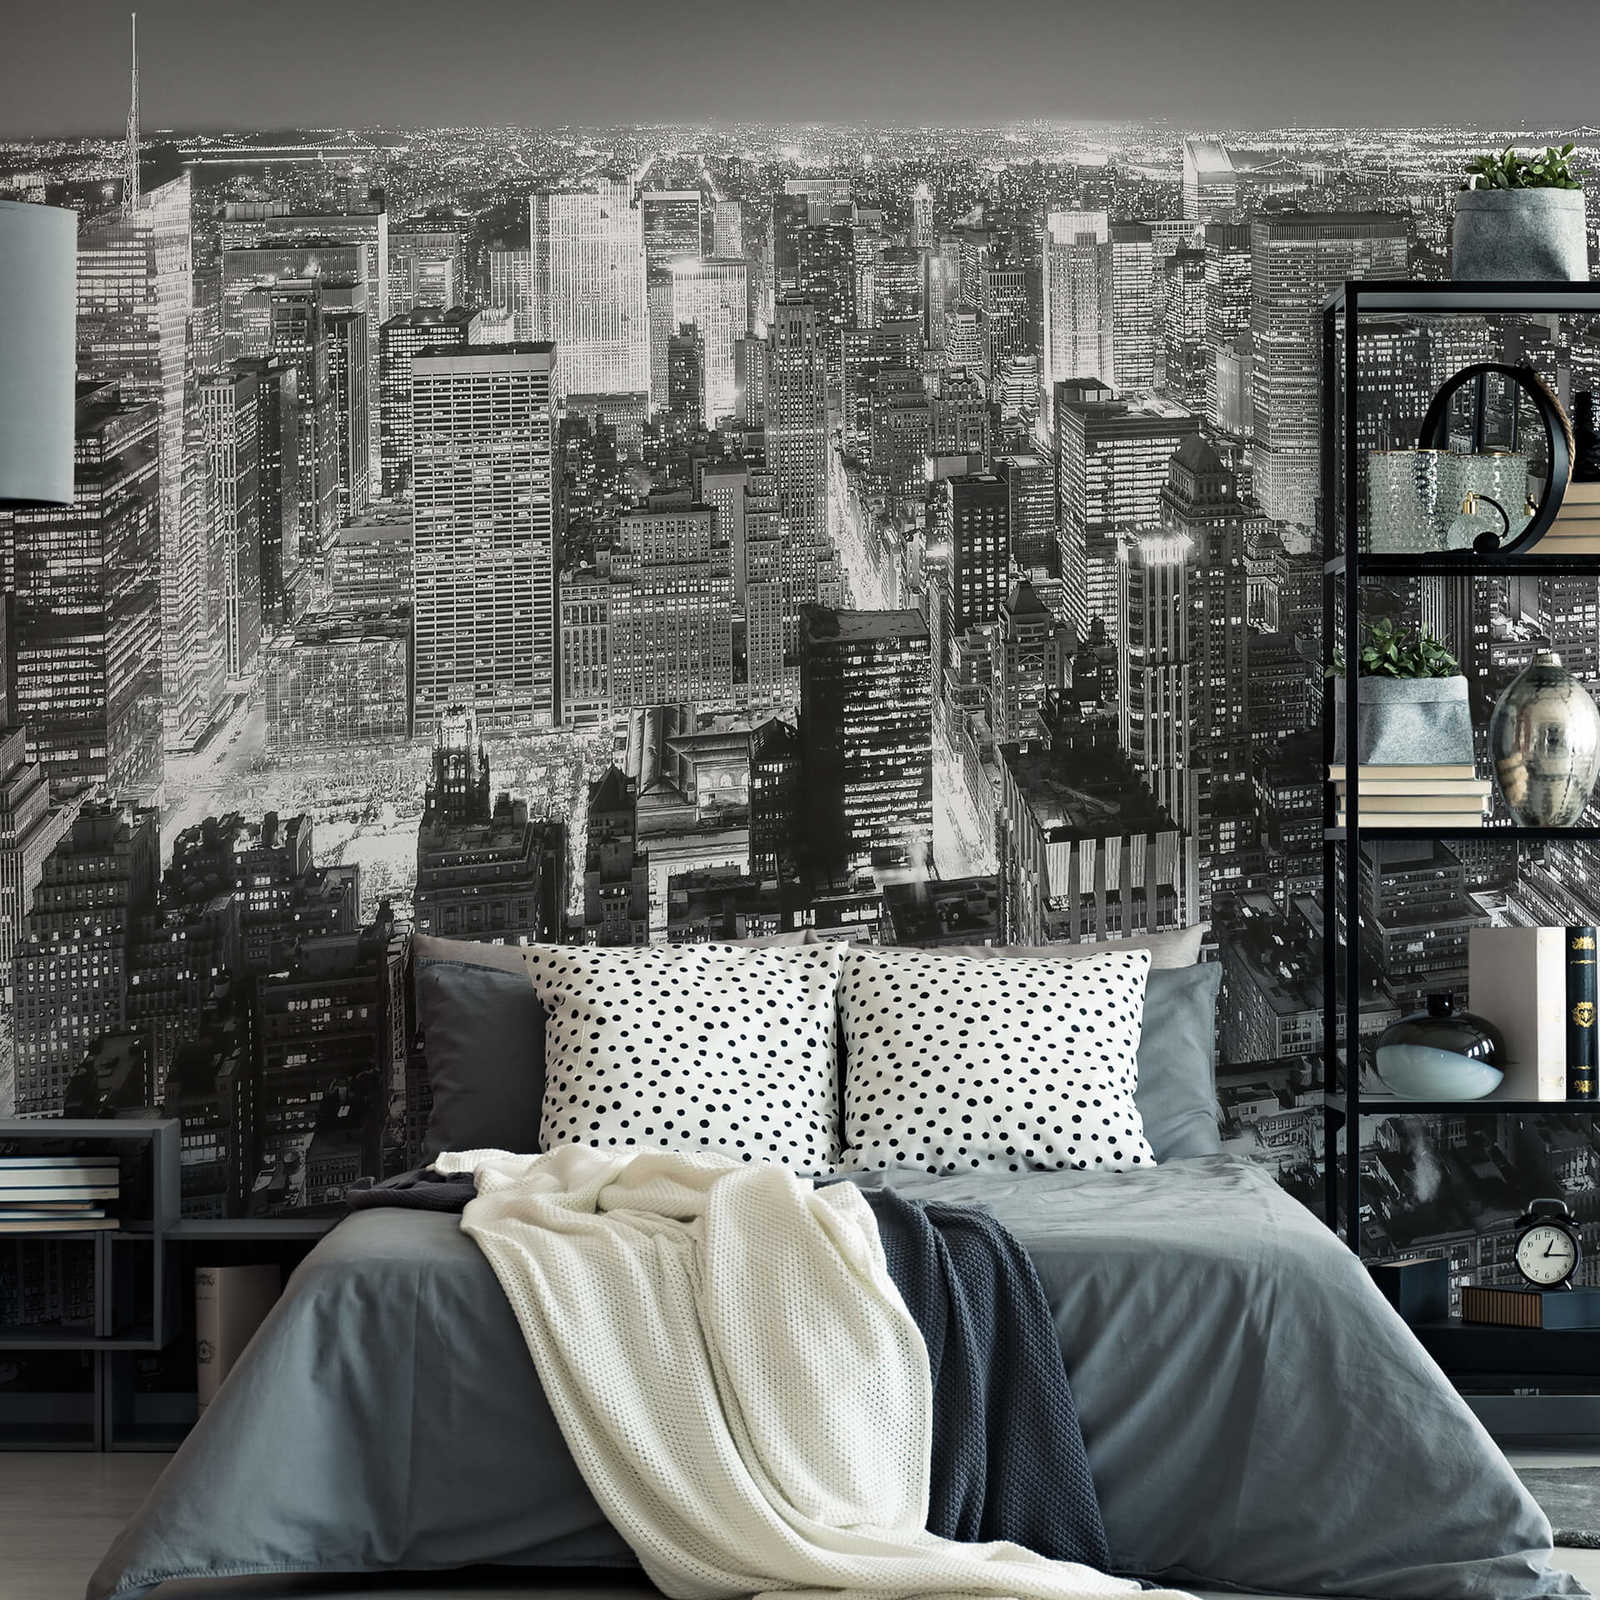             New York City black and white skyline mural
        